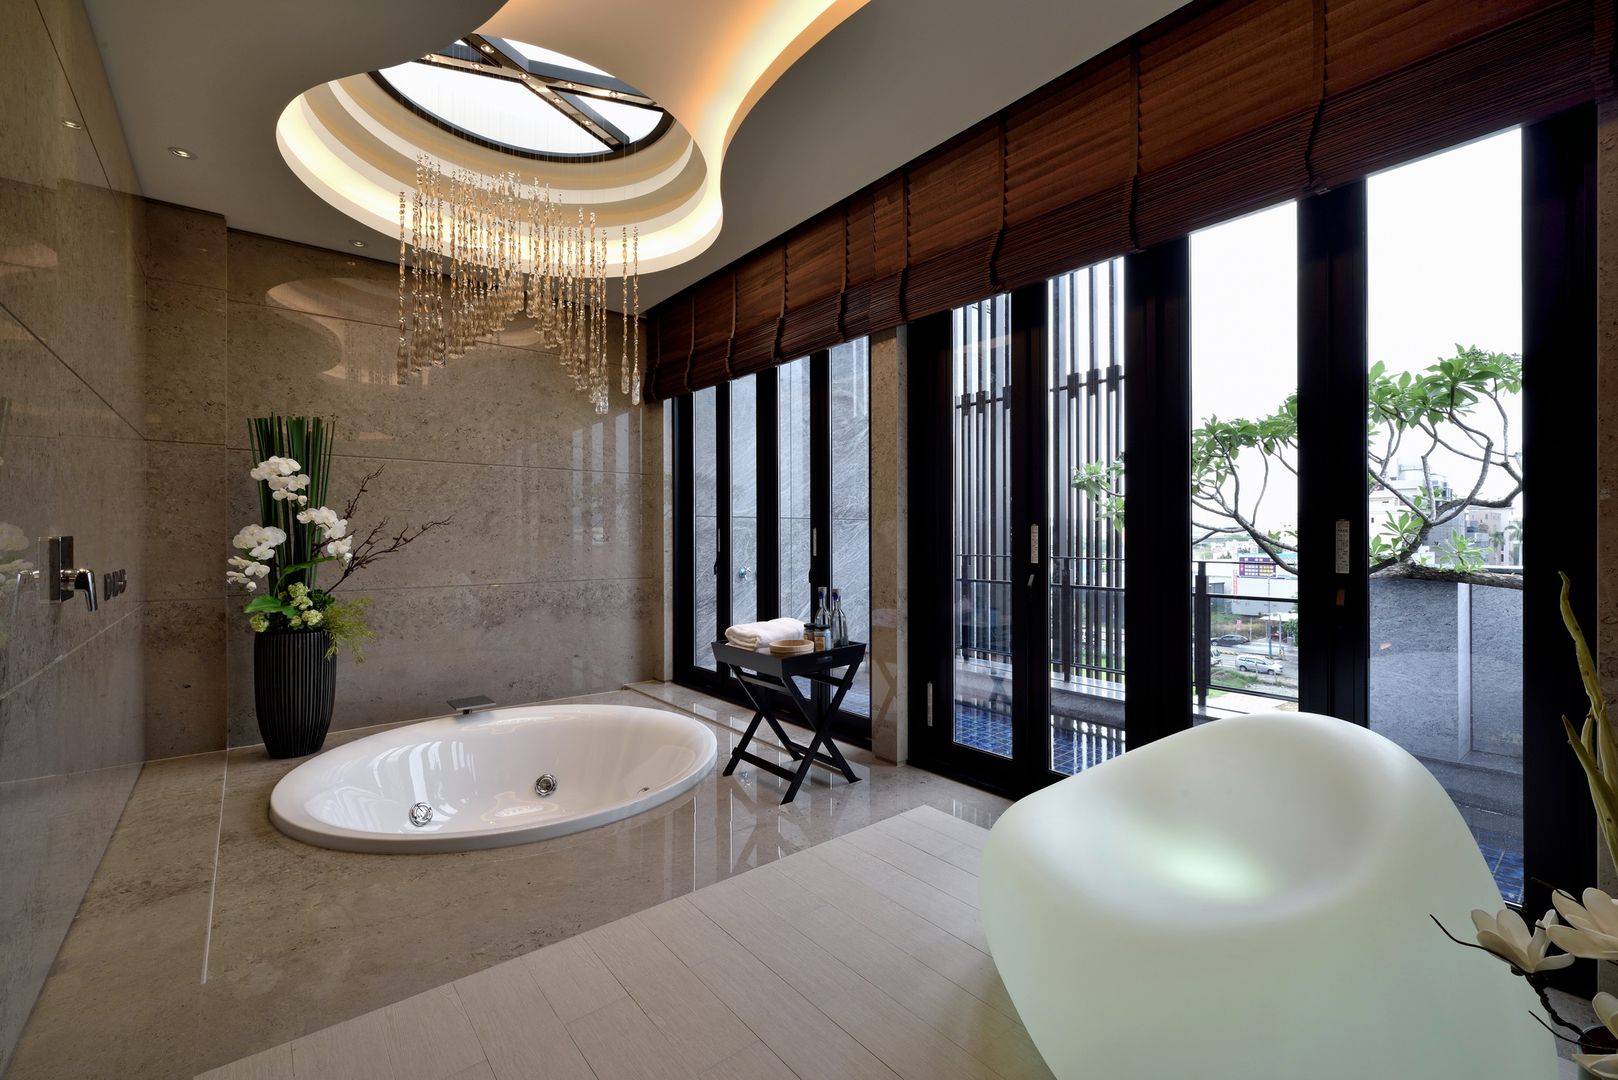 A cozy villa that enables you to escape life’s hustle!, 十邑設計 王勝正 Posamo Design 十邑設計 王勝正 Posamo Design Eclectic style bathroom